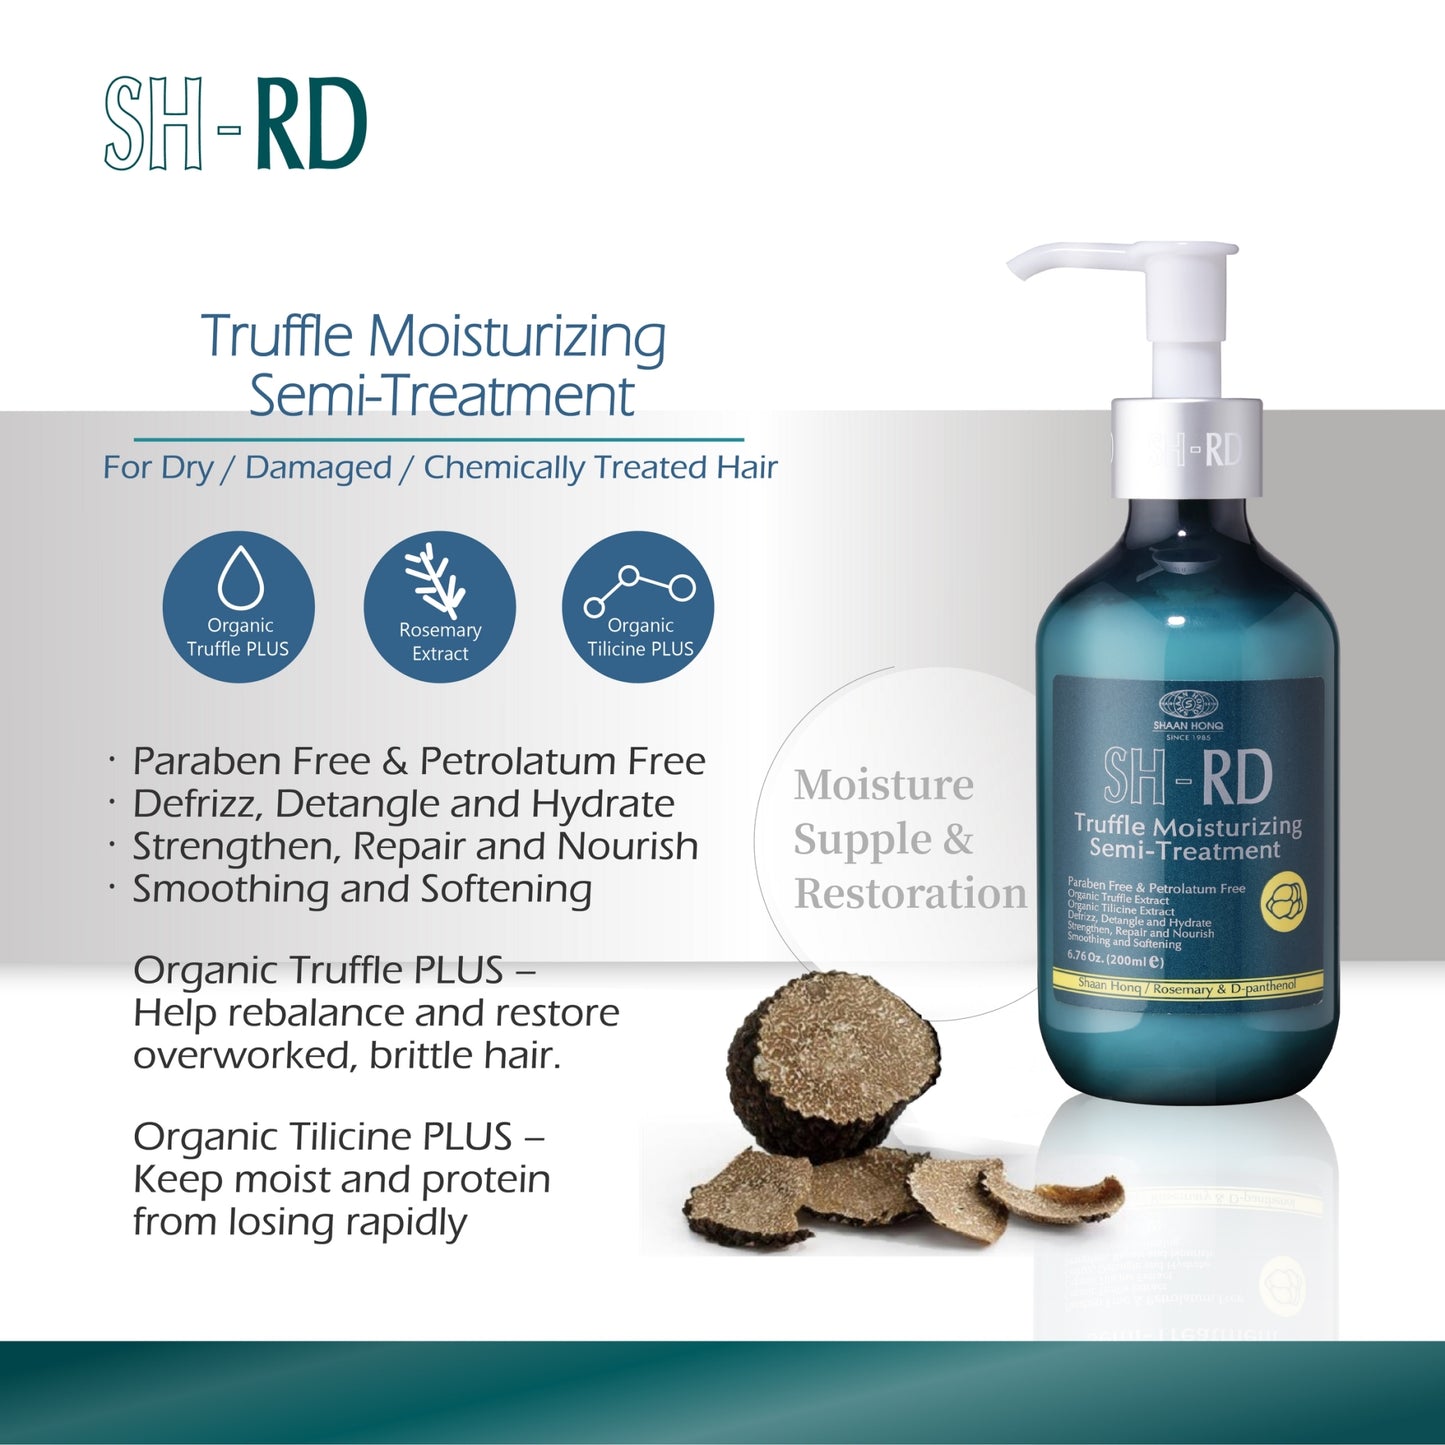 SH-RD Truffle Moisturizing Semi-Treatment (6.76oz/200ml)